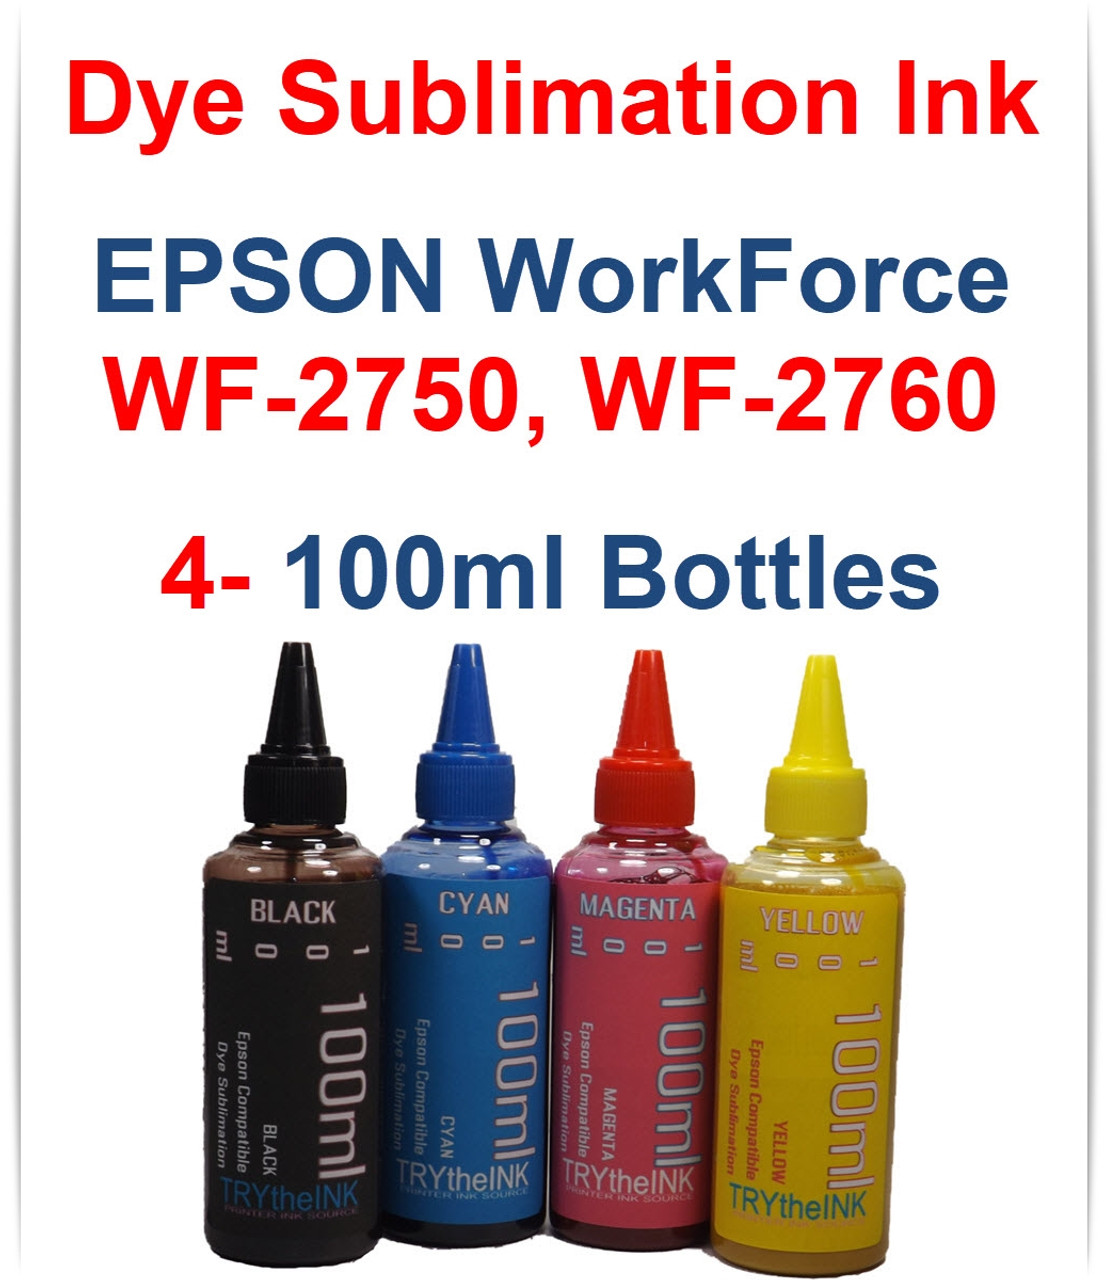 4 100ml Bottles Dye Sublimation Ink for Epson WorkForce WF-2750 WF-2760 Printers